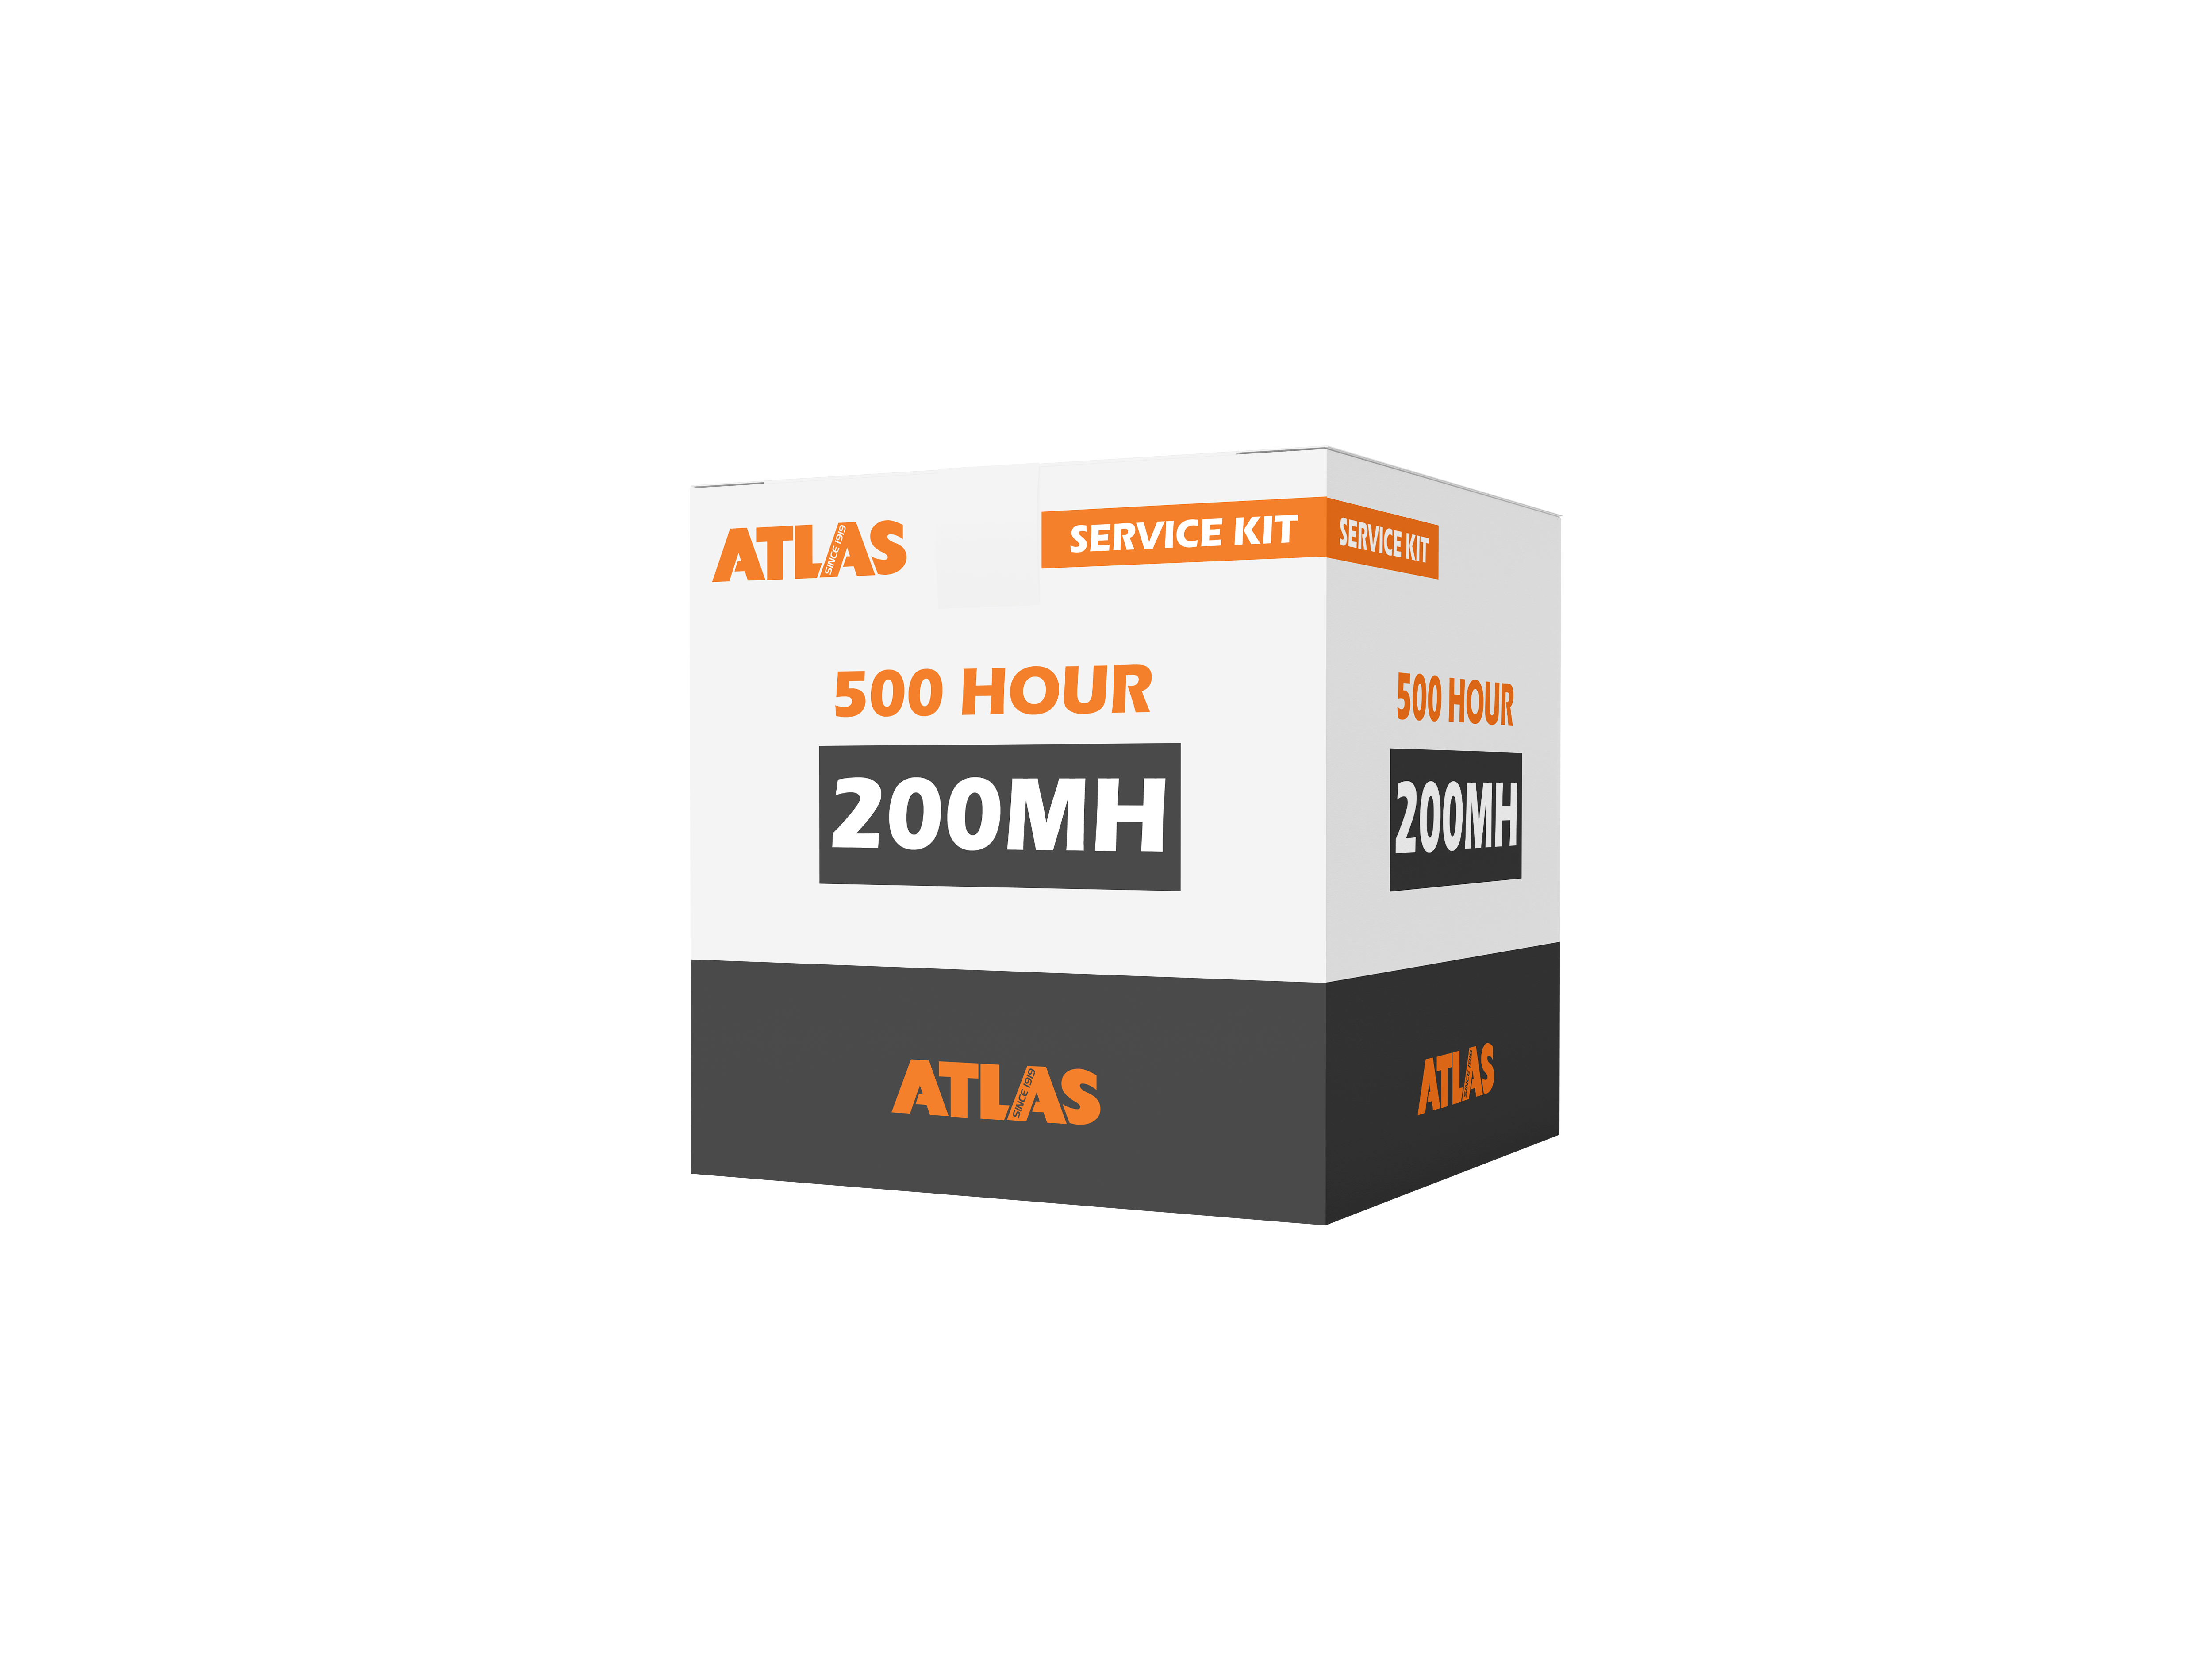 Atlas 200MH 500 Hour Service Kit